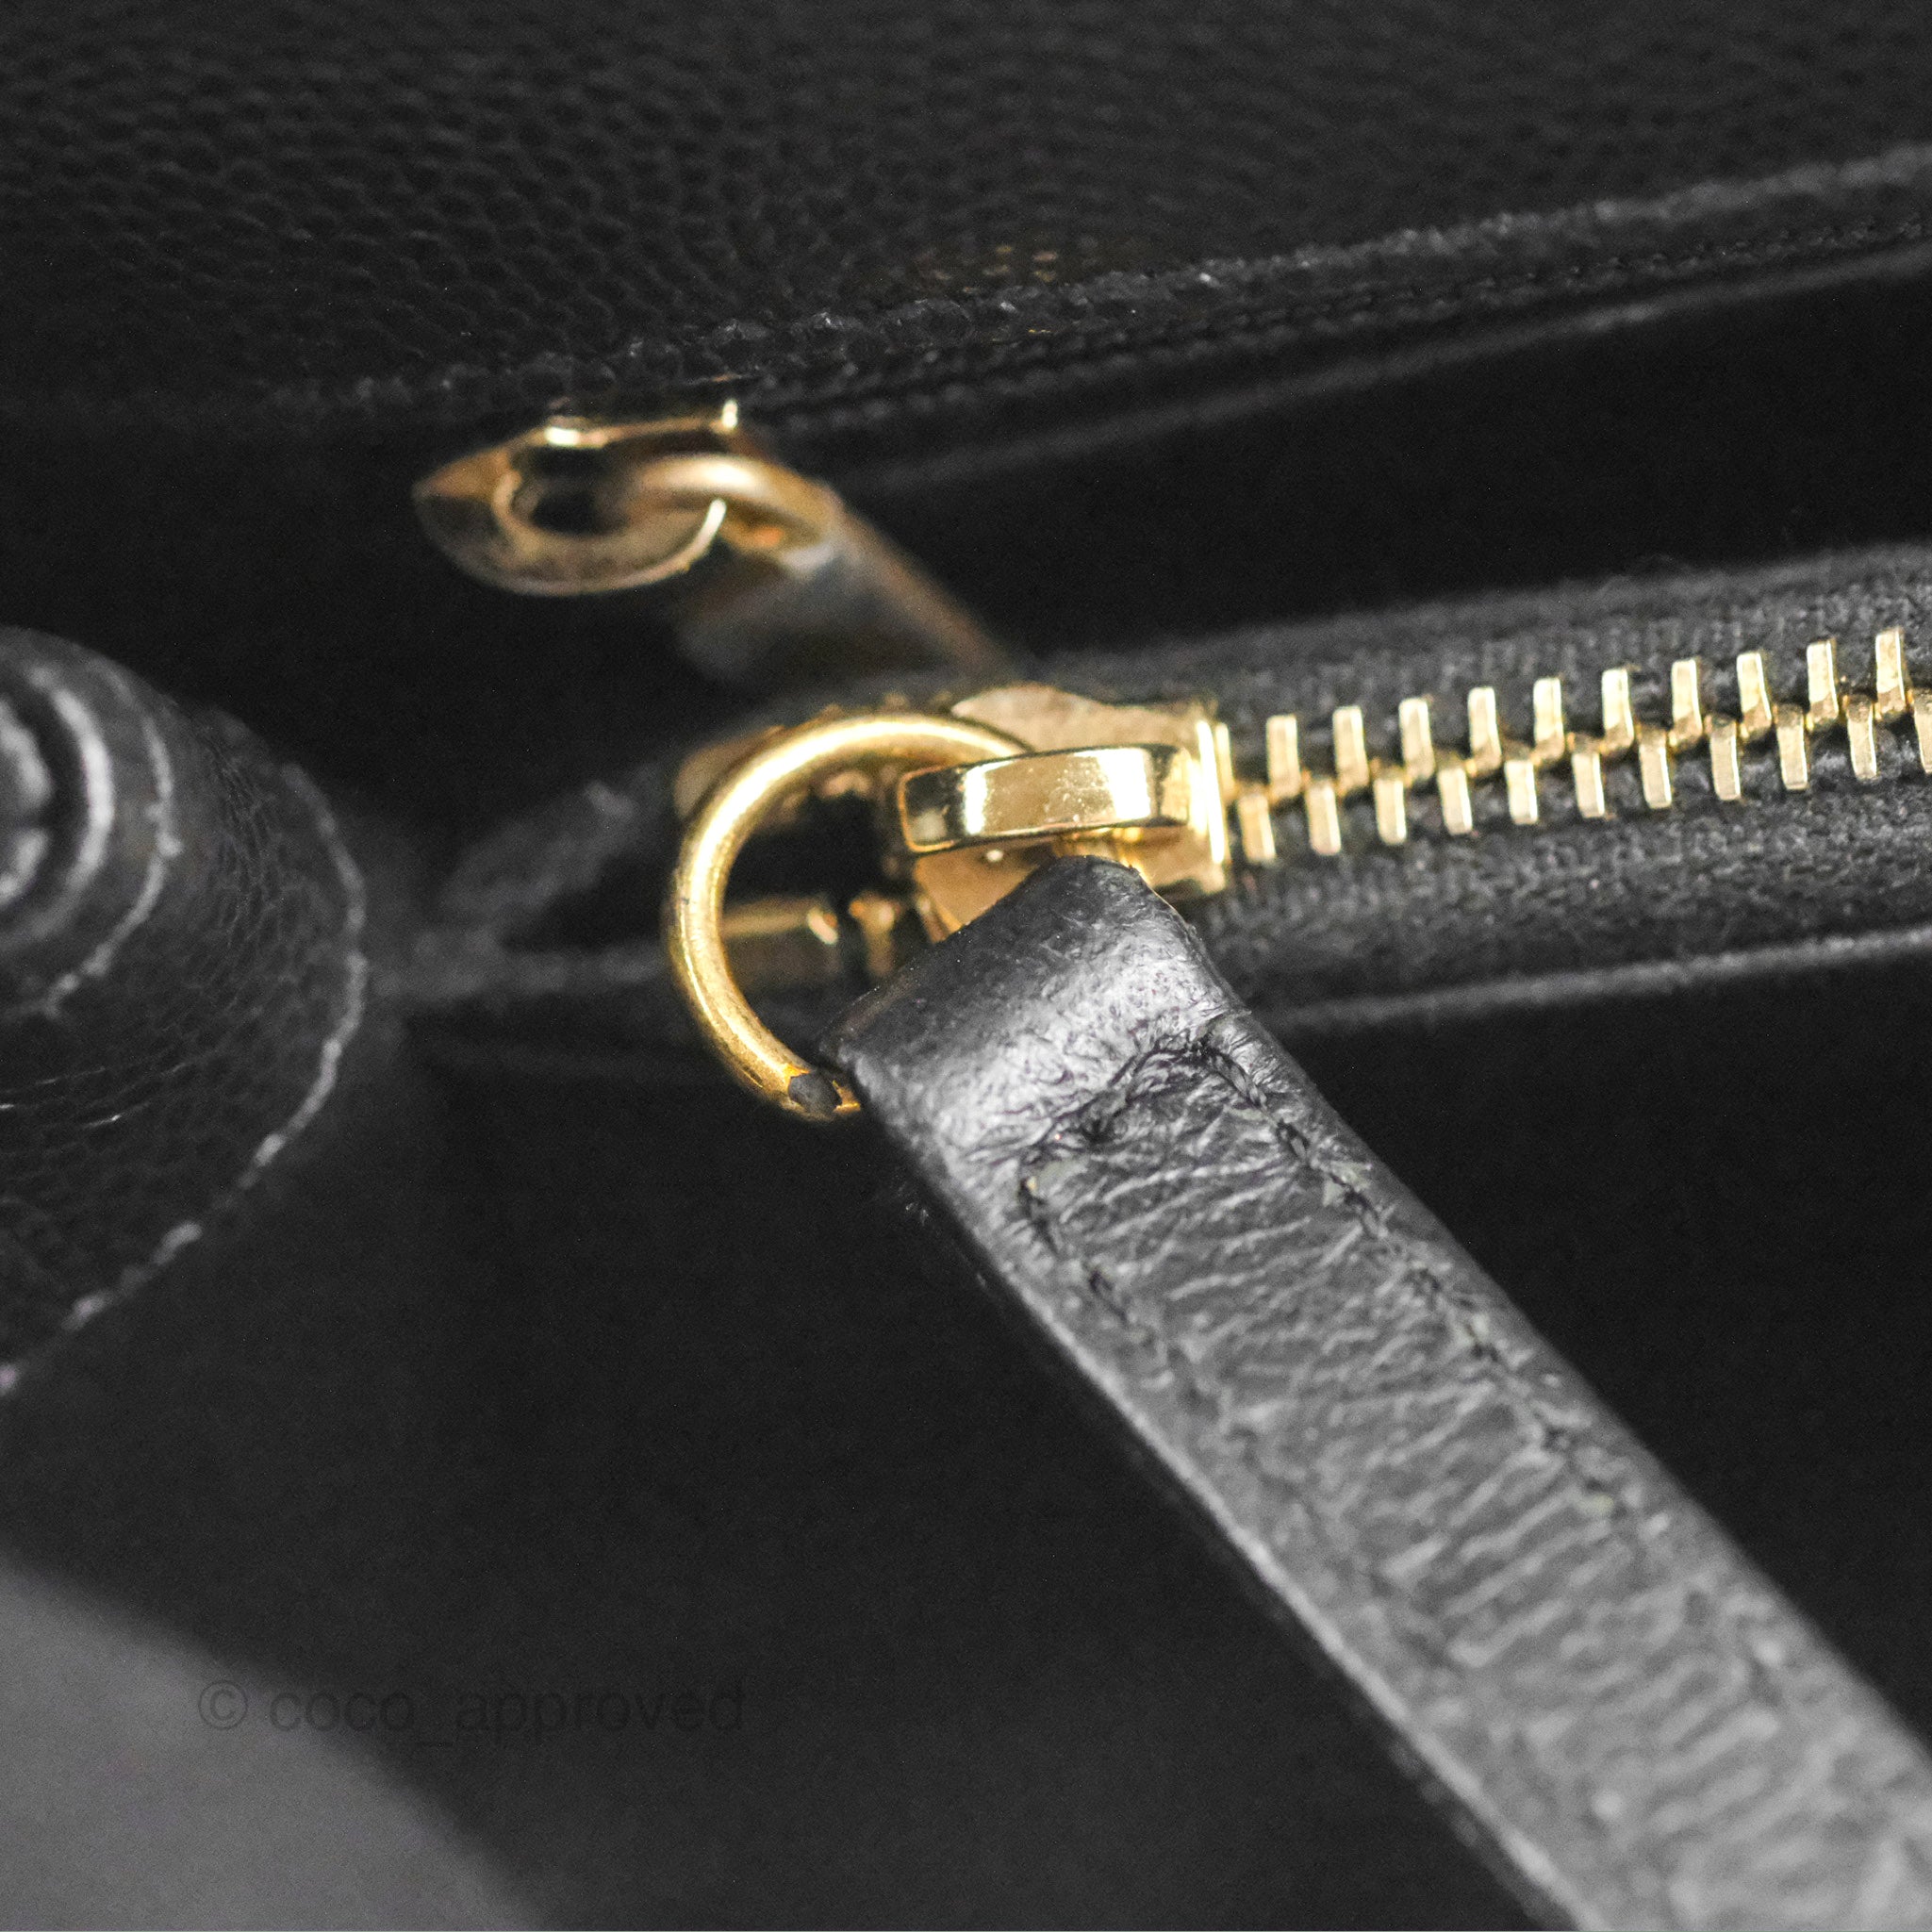 Chanel Medium Coco Handle Quilted Black Caviar Lizard Handle Gold